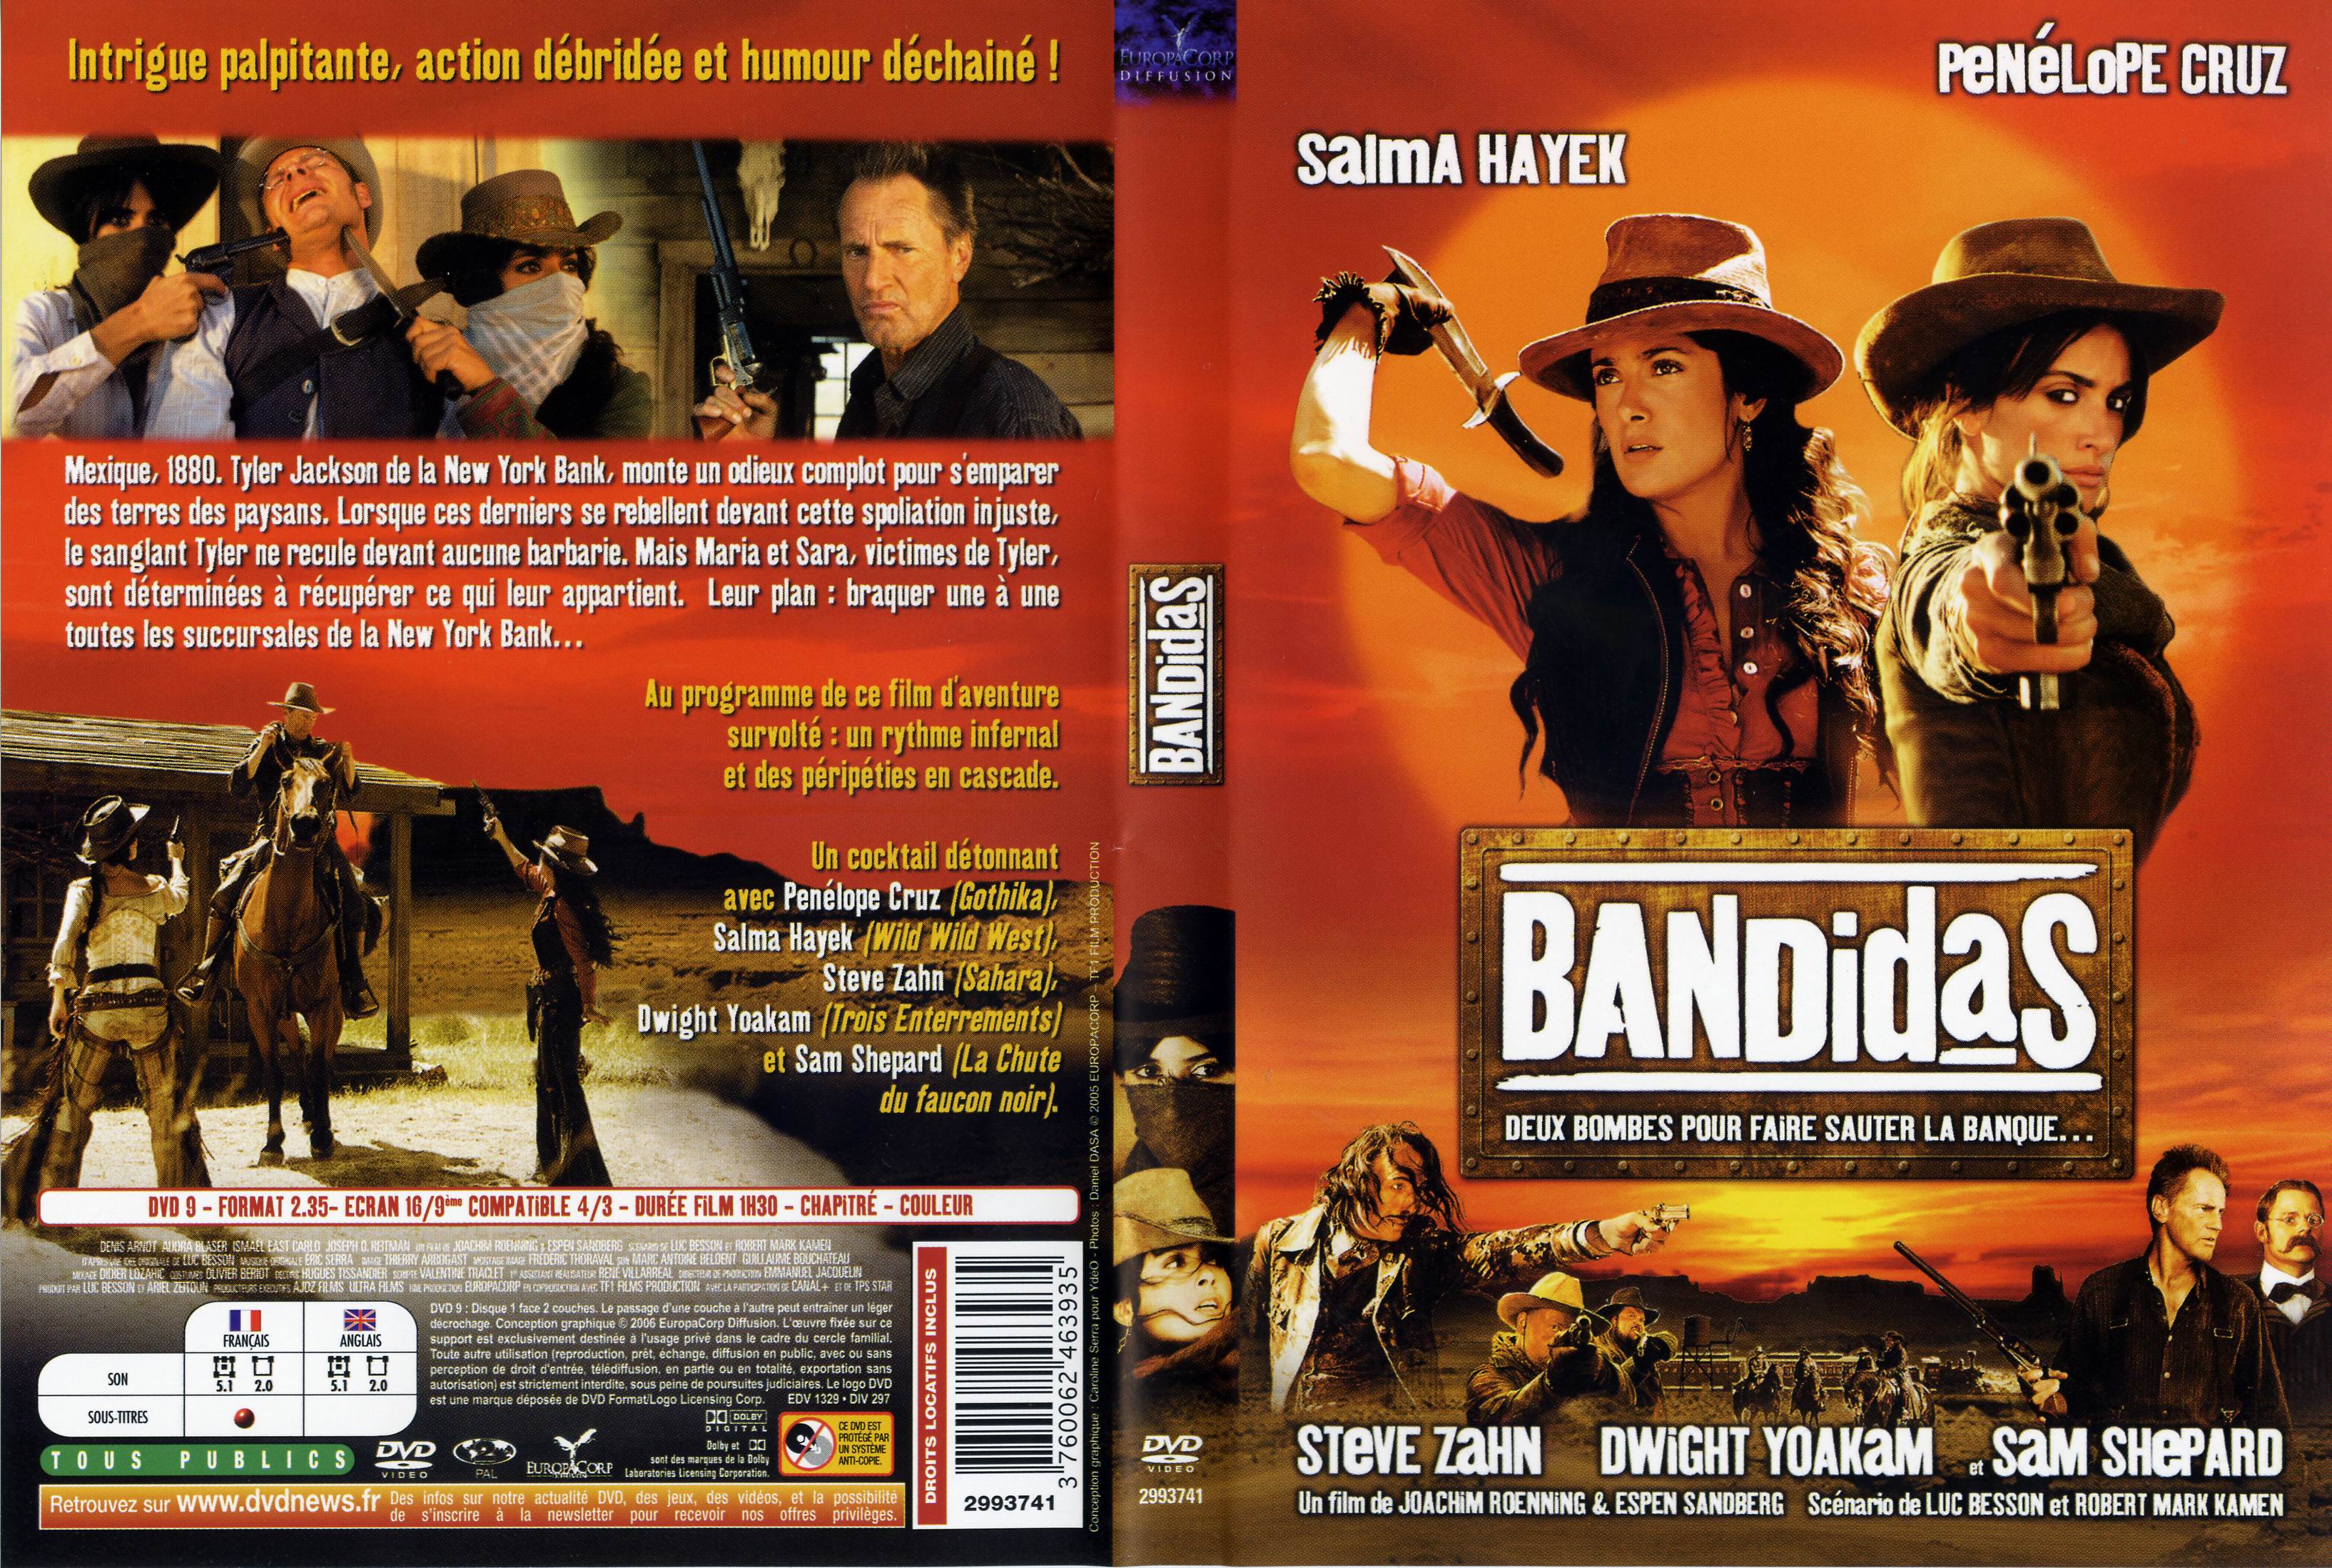 Jaquette DVD Bandidas v2